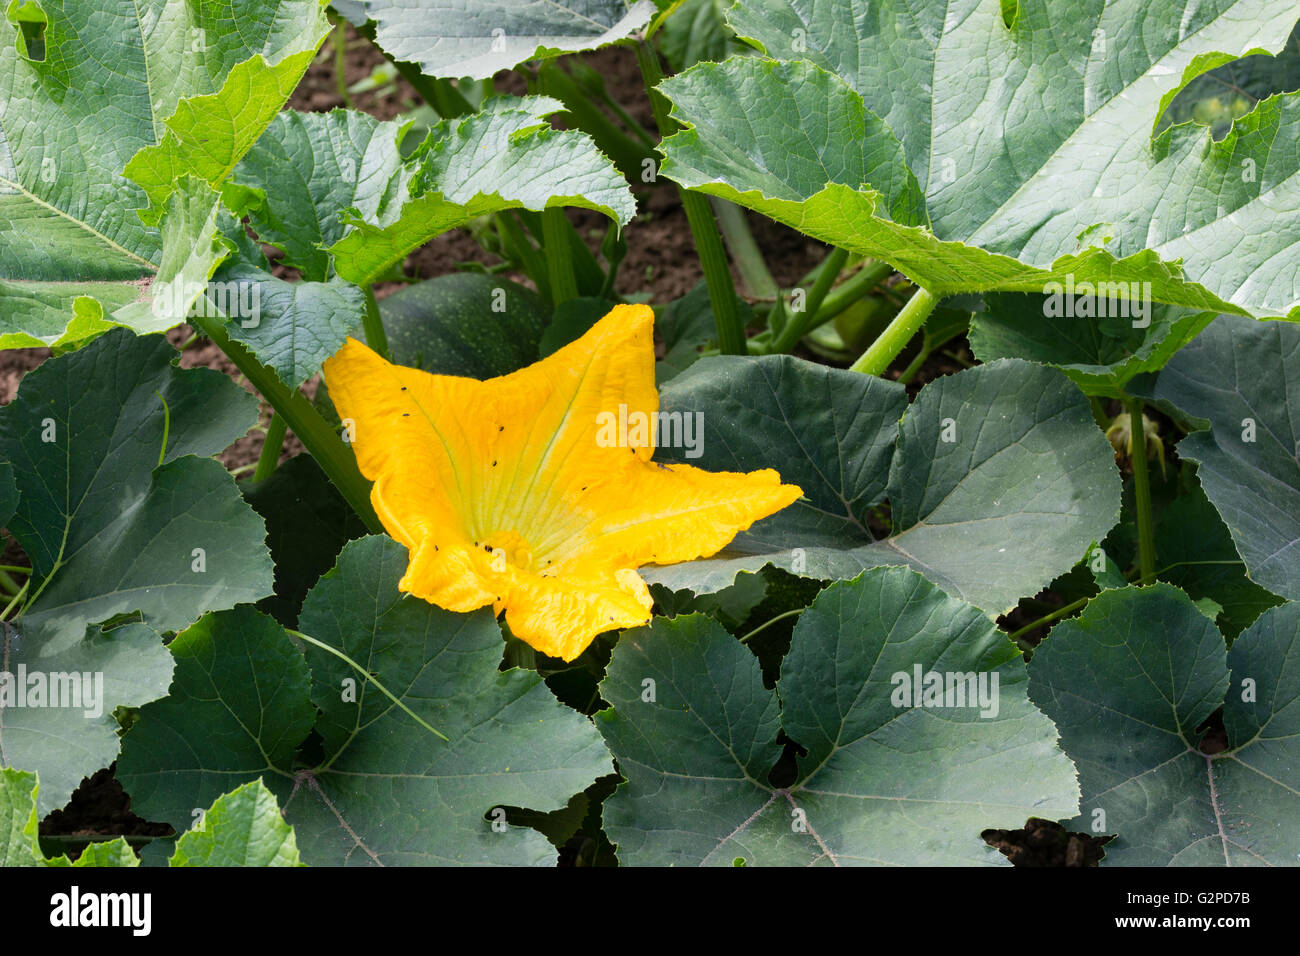 Heritage vegetable, Pumpkin 'Jack O'Lantern' flower amid the large leaved foliage Stock Photo